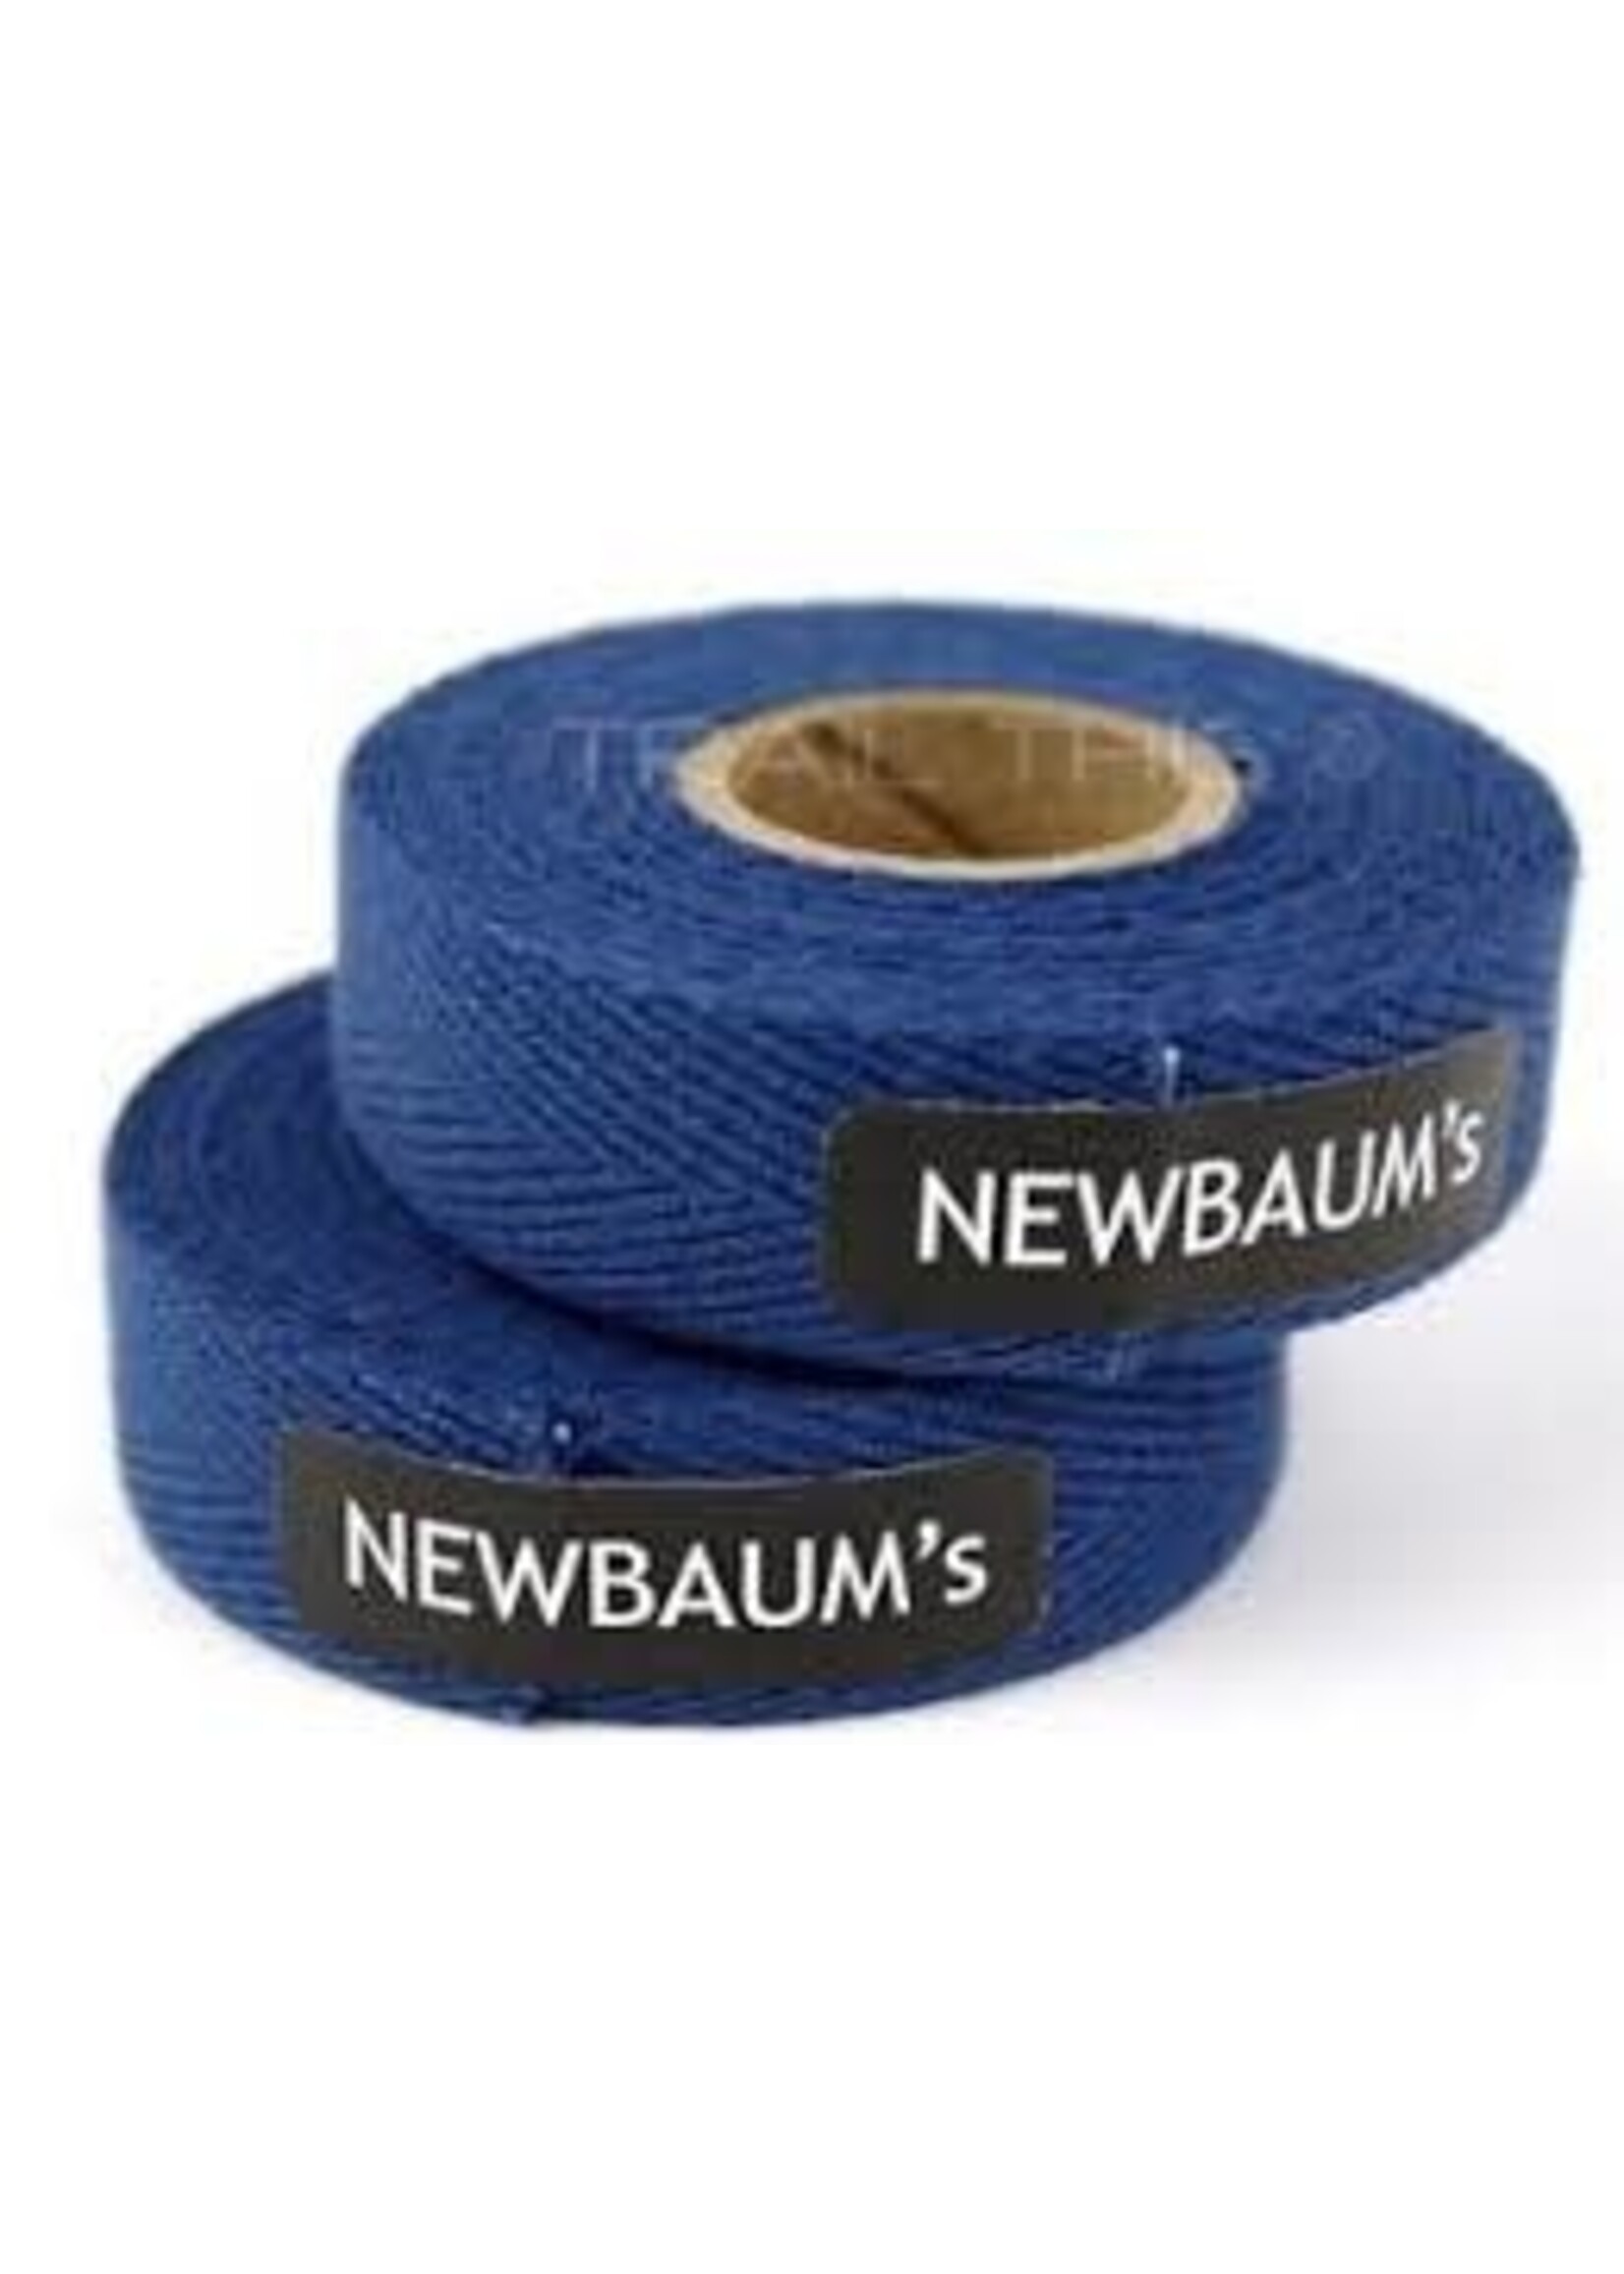 Newbaum's NEWBAUM'S Nastro Per Maniglie Colore Blu